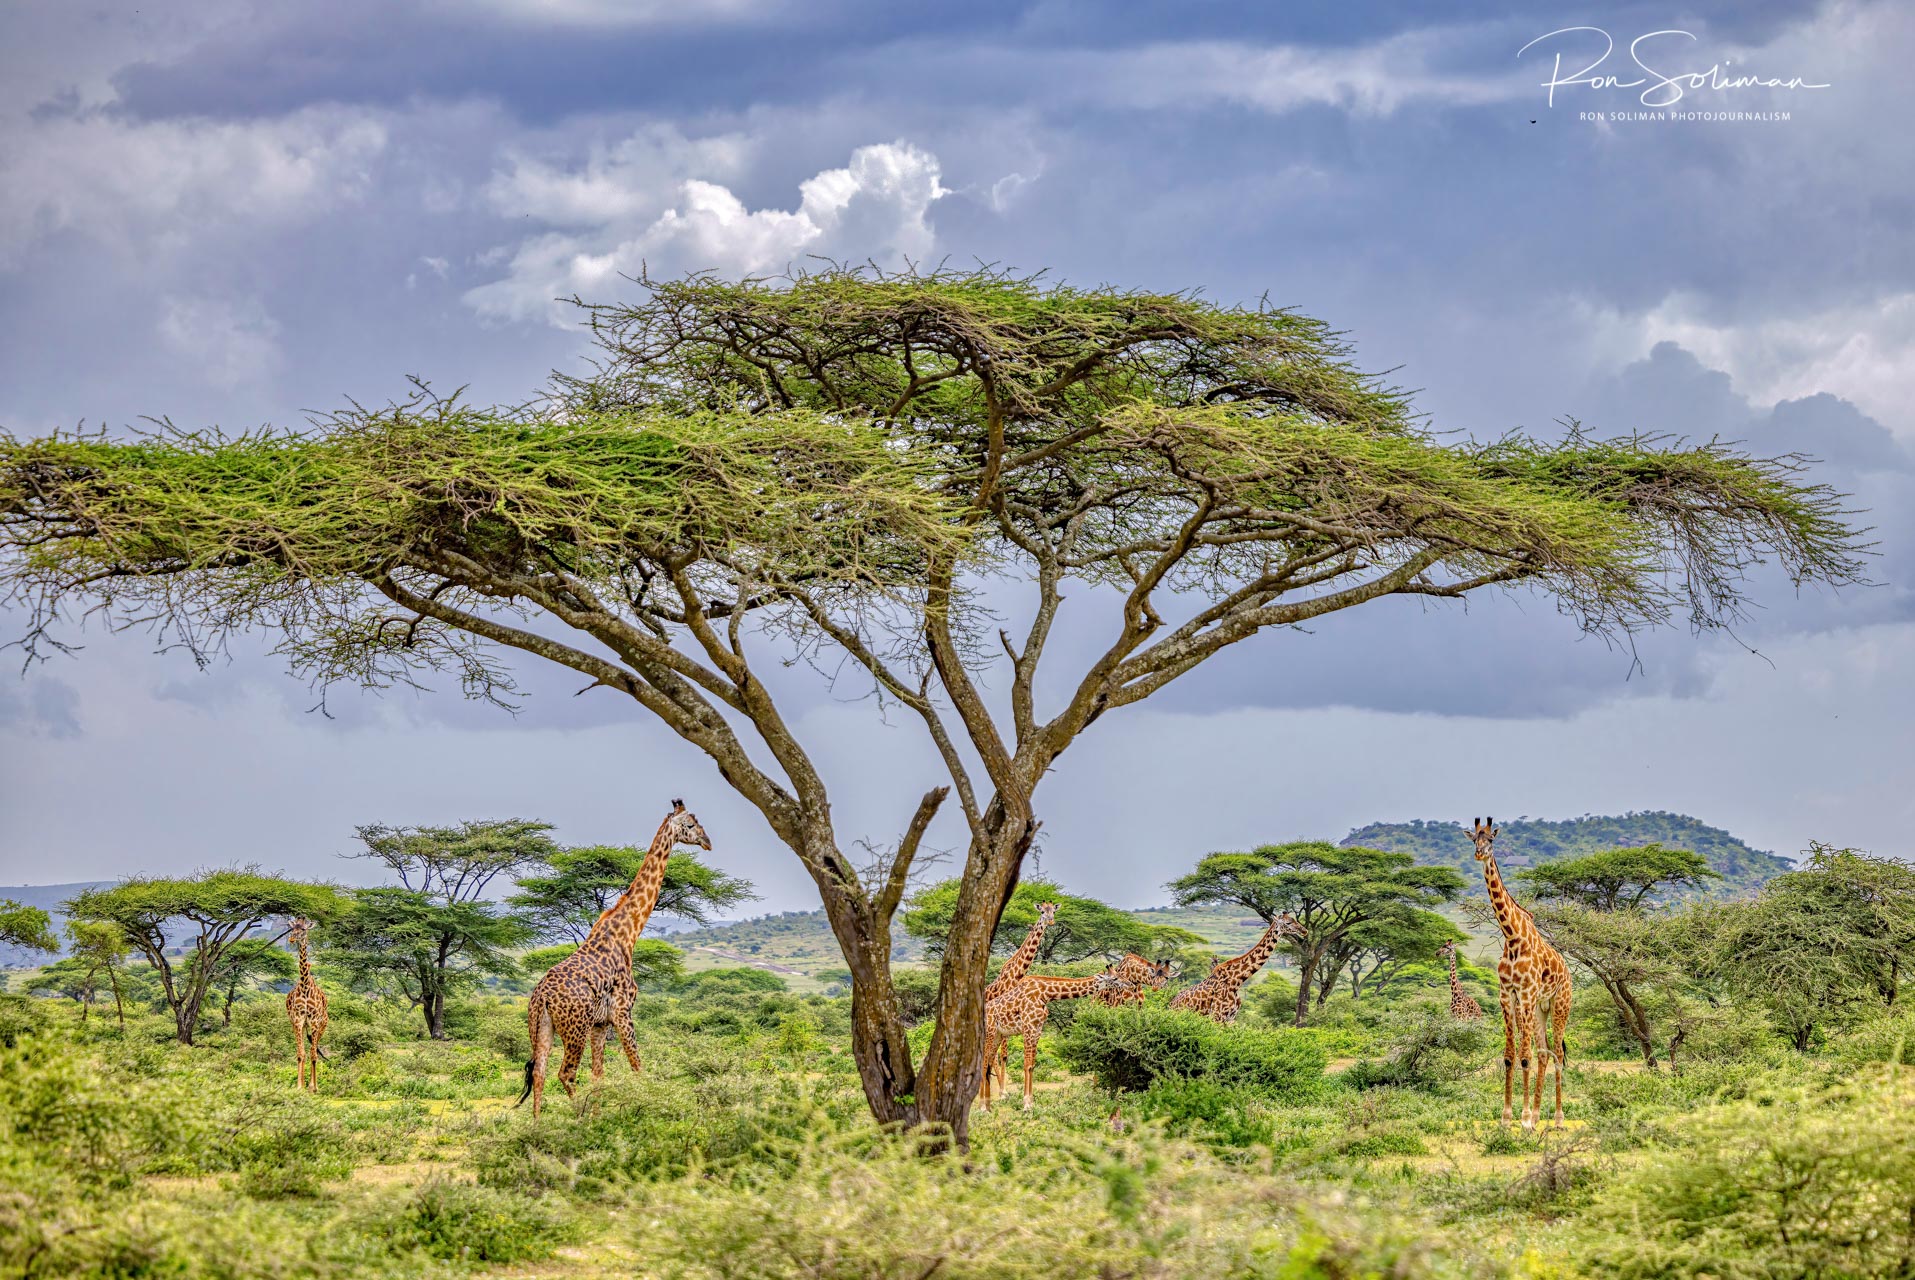 Best Wildlife photography Giraffes